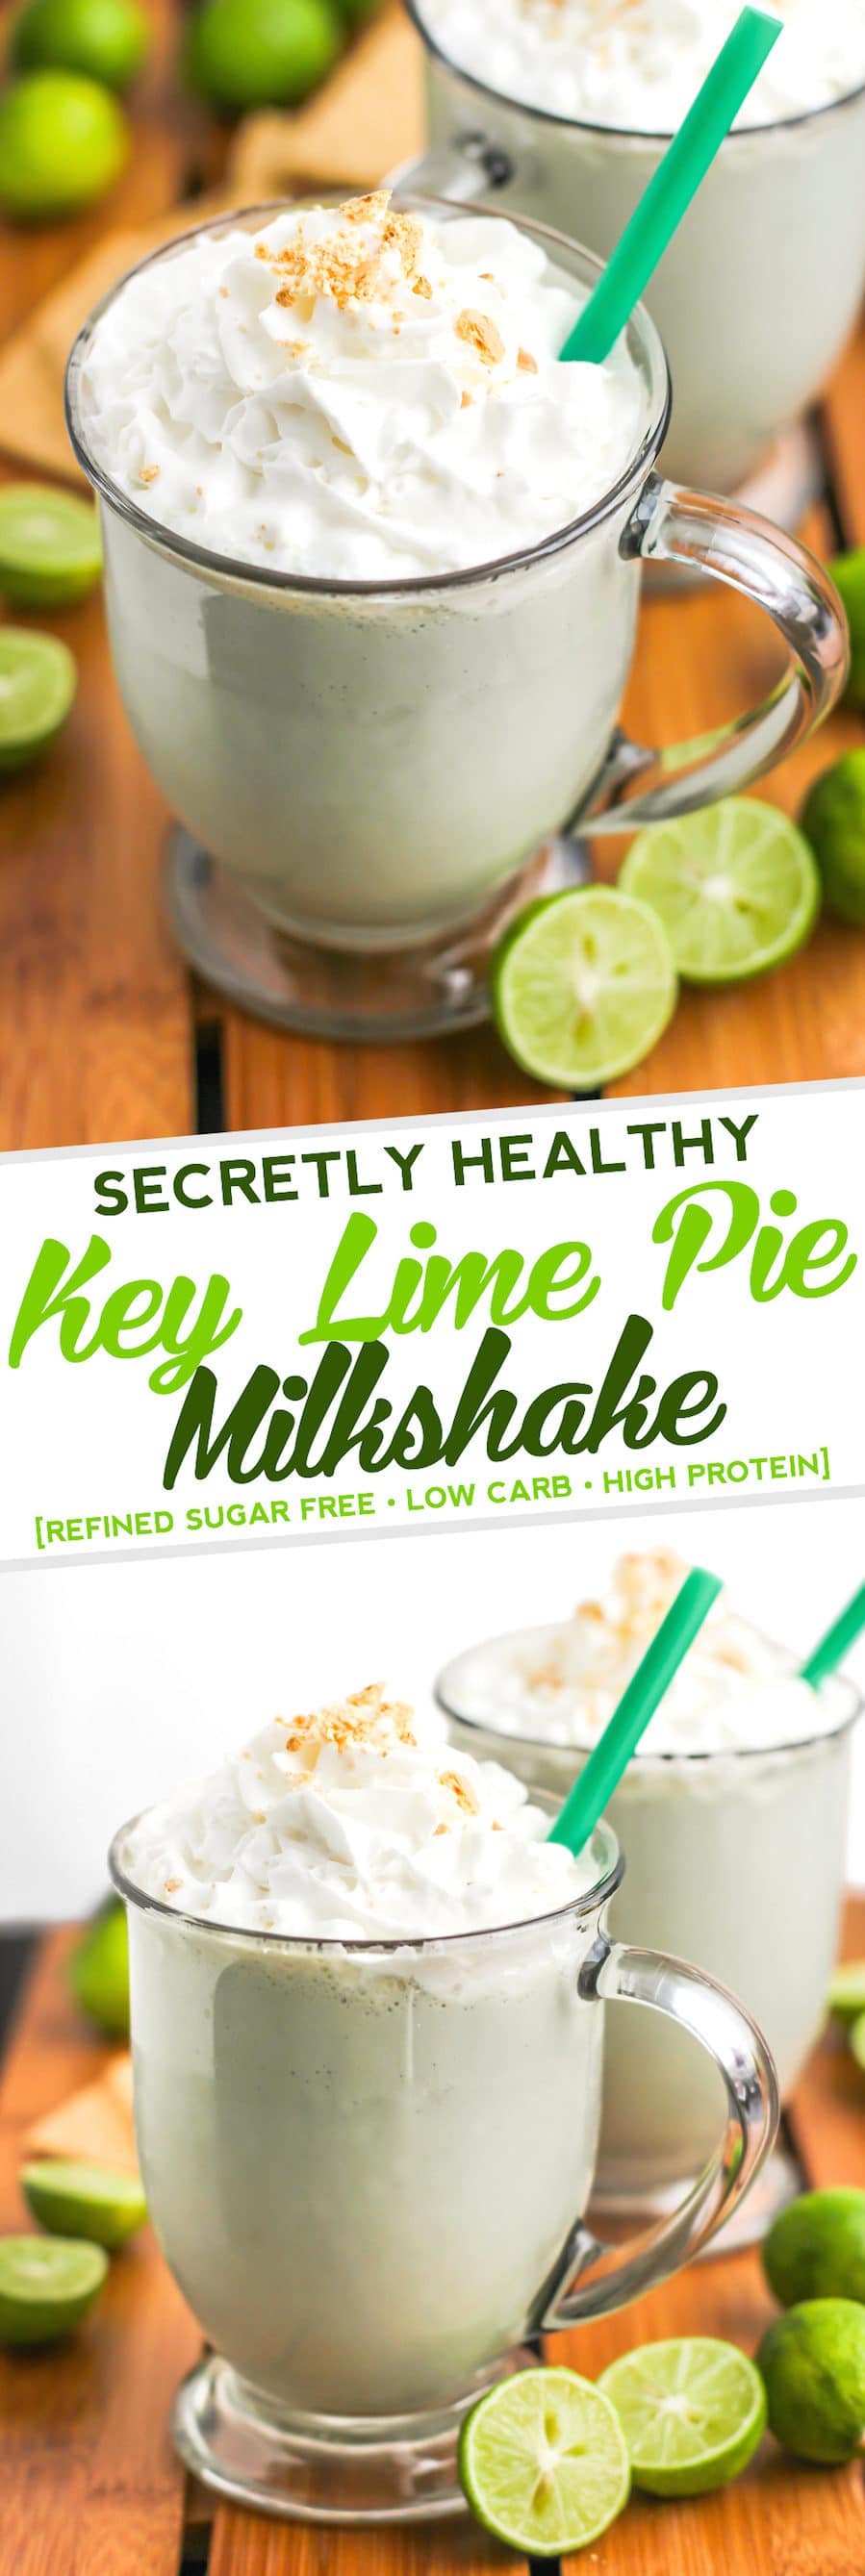 Healthy Key Lime Pie Milkshake (refined sugar free, low carb, high protein, gluten free) - Desserts with Benefits